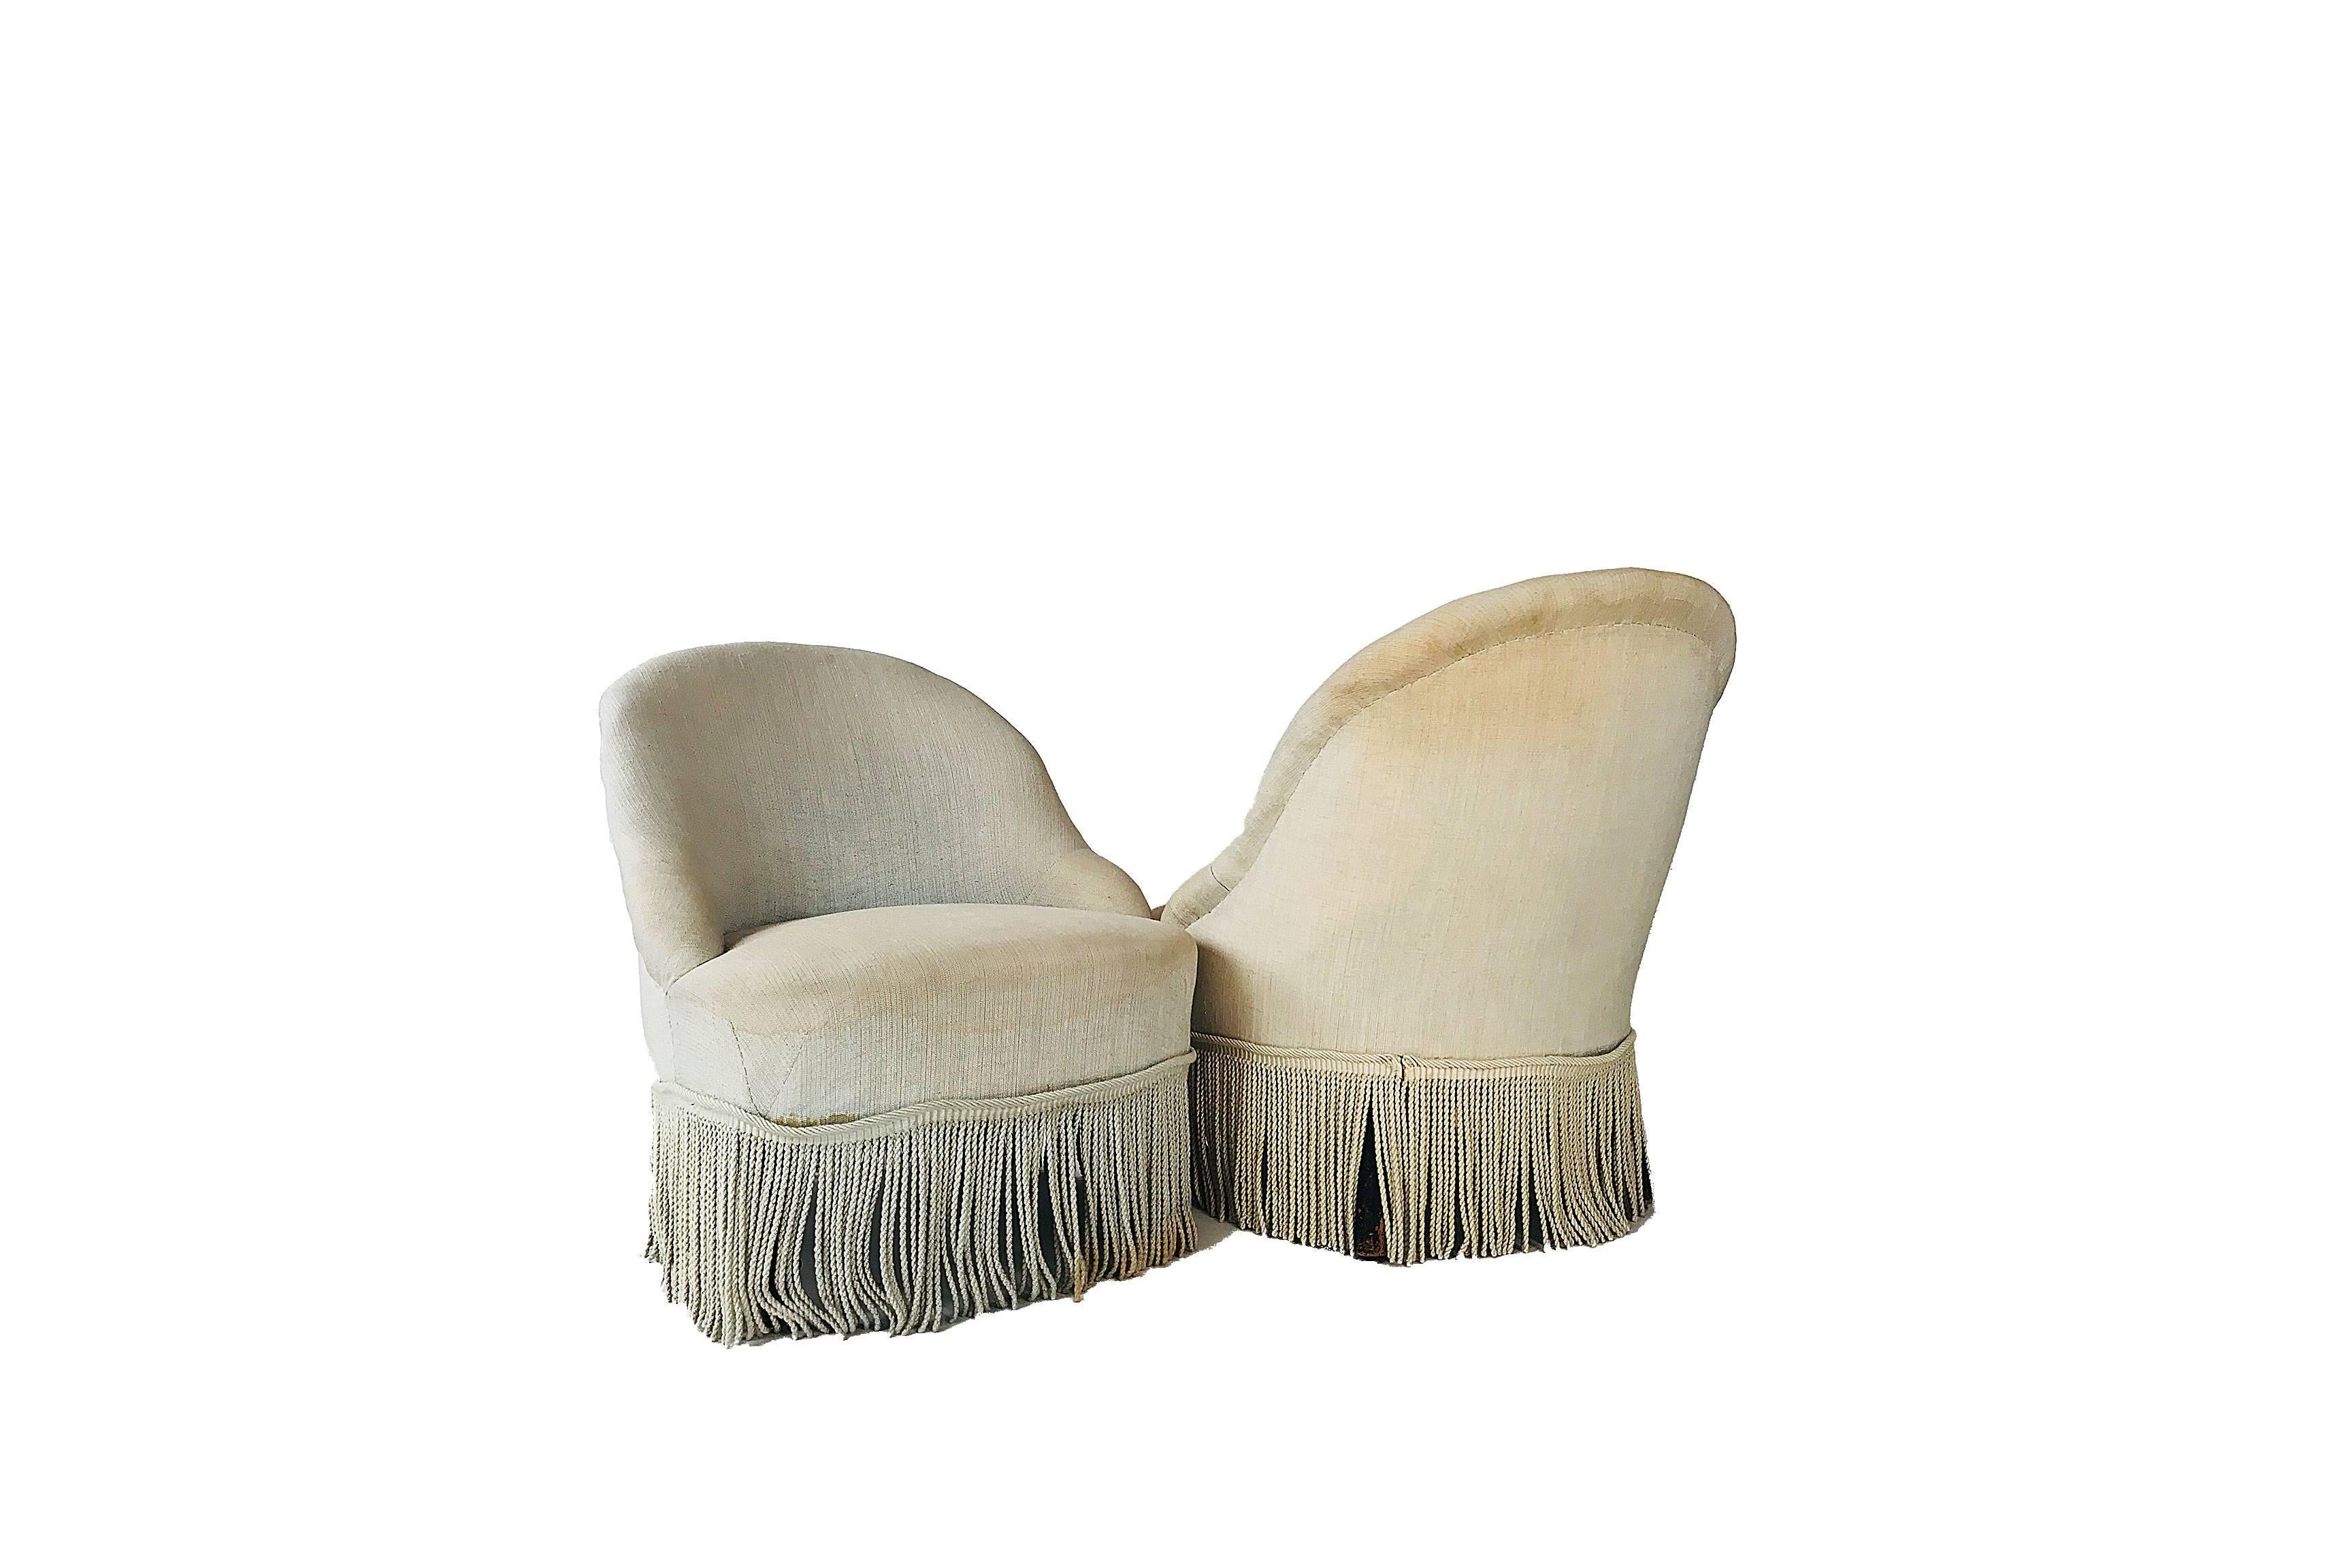 A pair of Napoleon III style slipper chairs with tassel decoration, circa 1880. Raised on turned walnut legs. Wonderful scale.